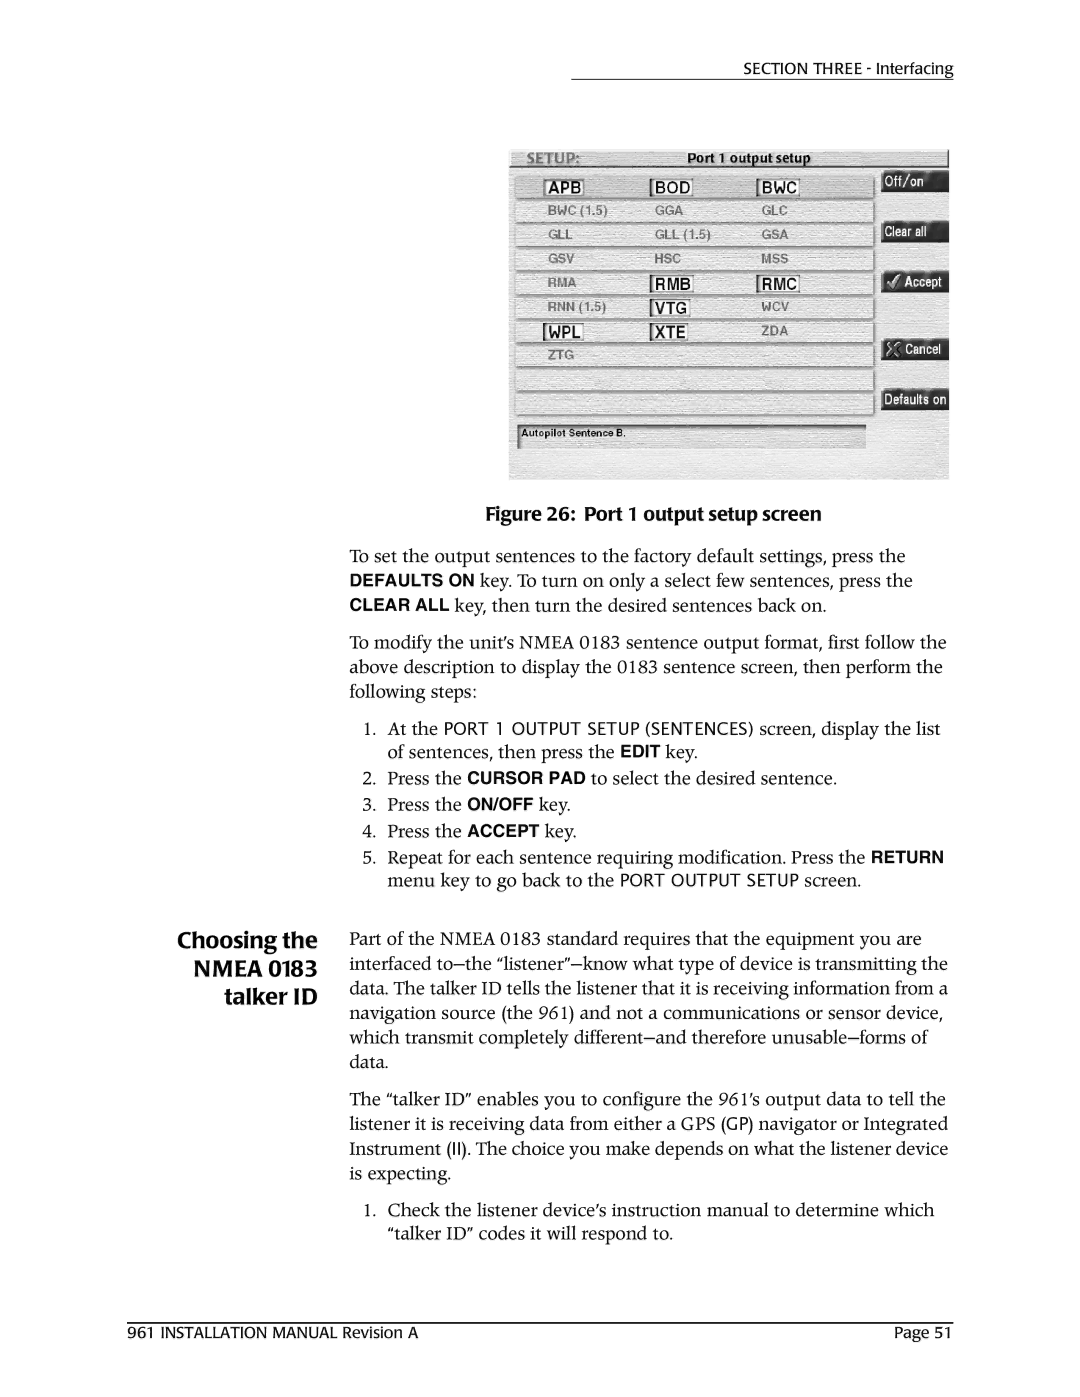 NorthStar Navigation 961XD installation manual Choosing the Nmea 0183 talker ID, Port 1 output setup screen 